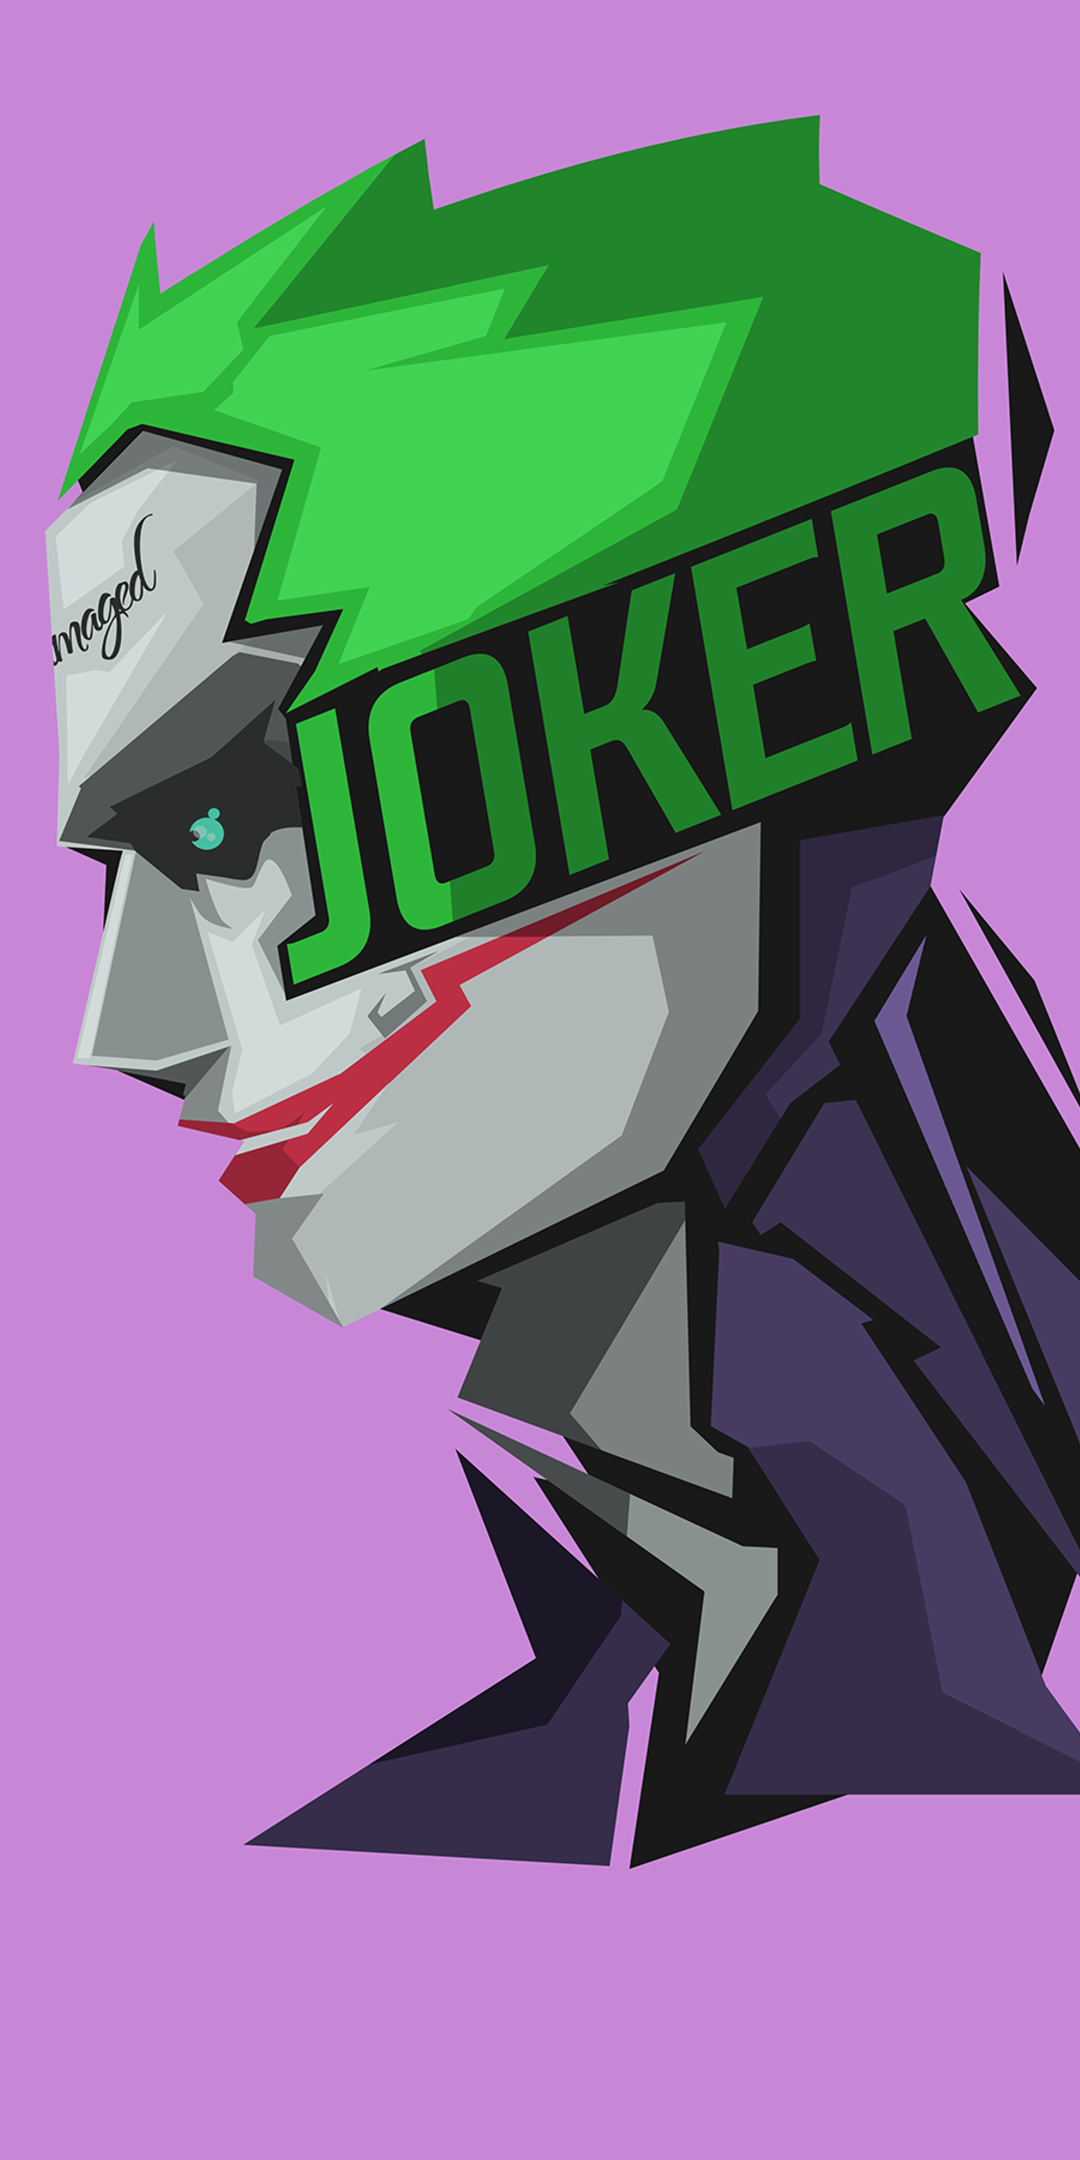 Joker phone wallpaper 1080P, 2k, 4k Full HD Wallpaper, Background Free Download. Wallpaper Crafter